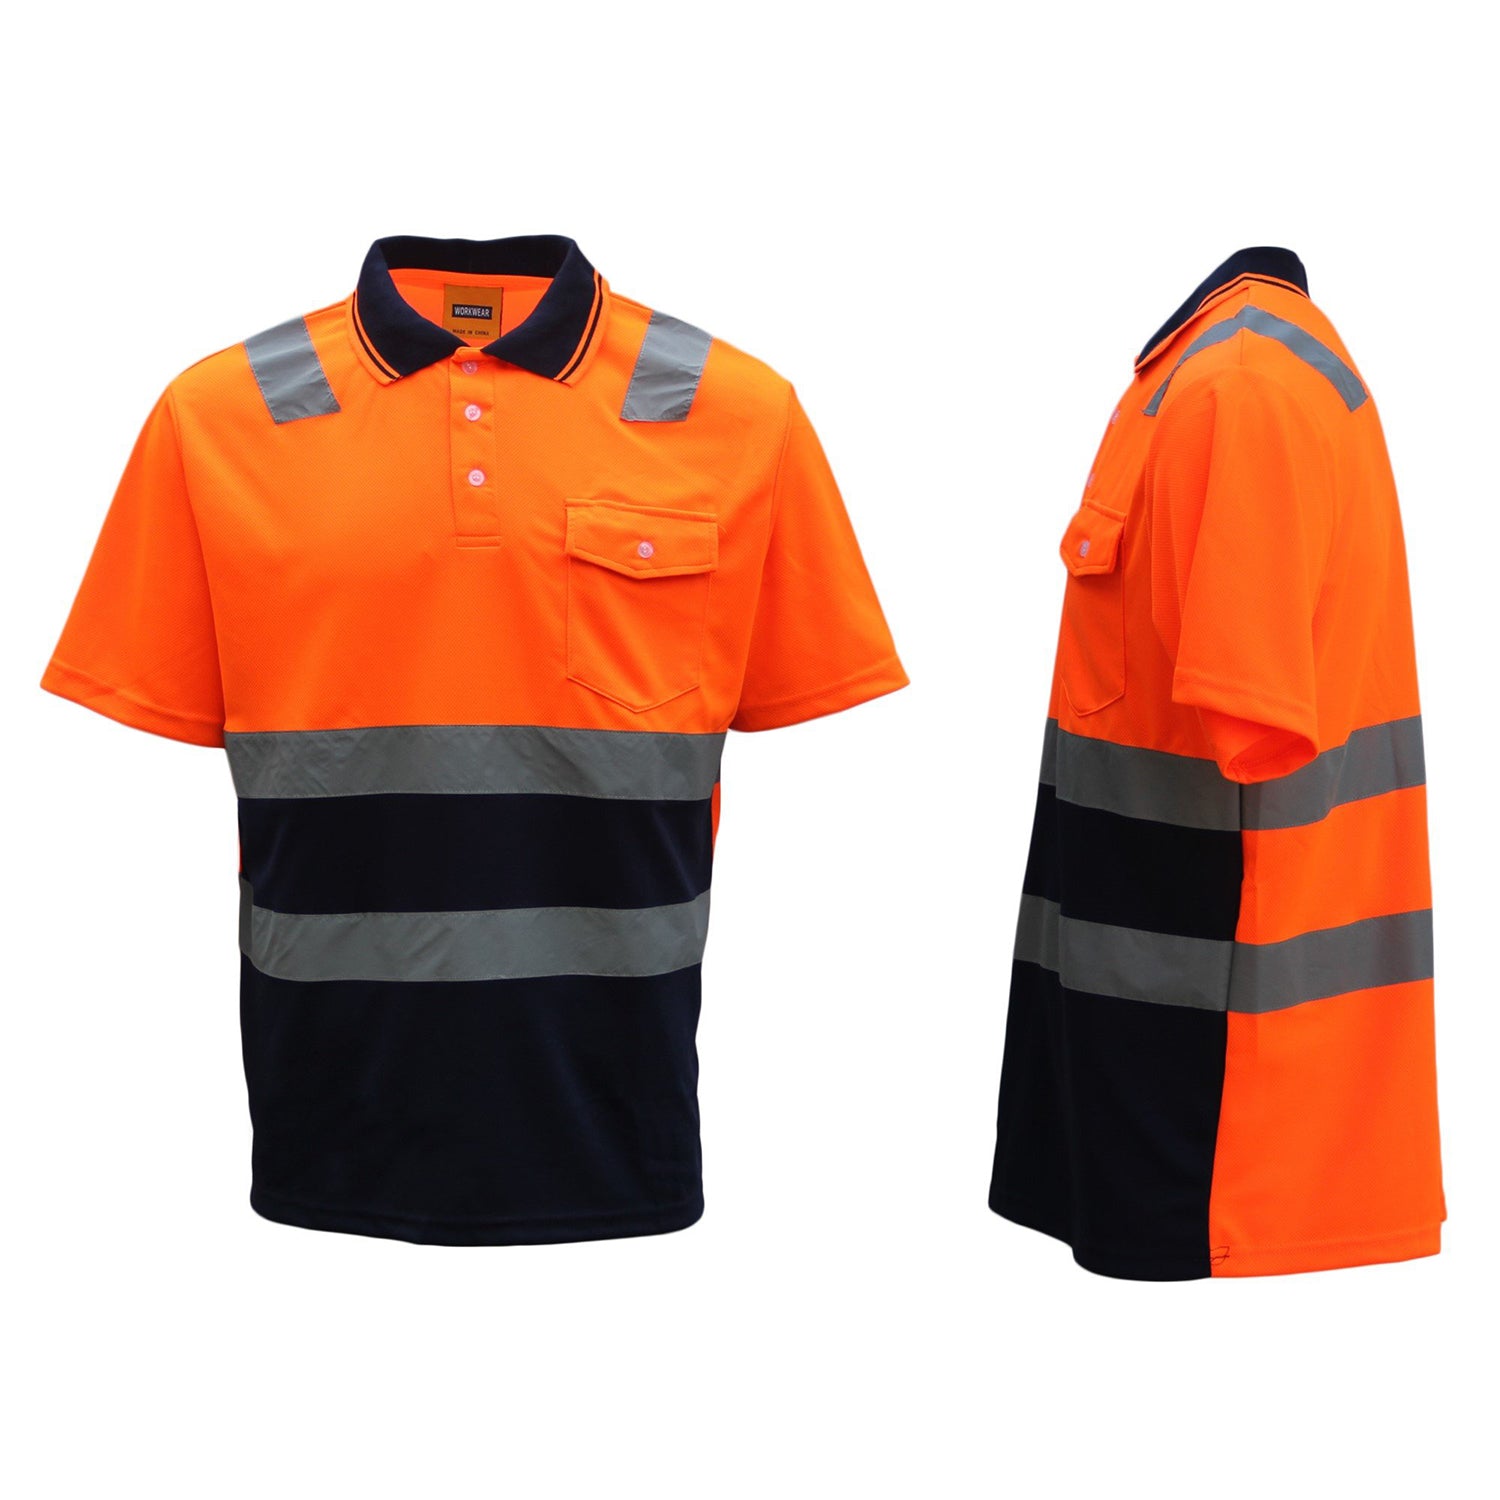 HI VIS Short Sleeve Workwear Shirt w Reflective Tape Cool Dry Safety Polo 2 Tone, Fluoro Orange / Navy, 2XL